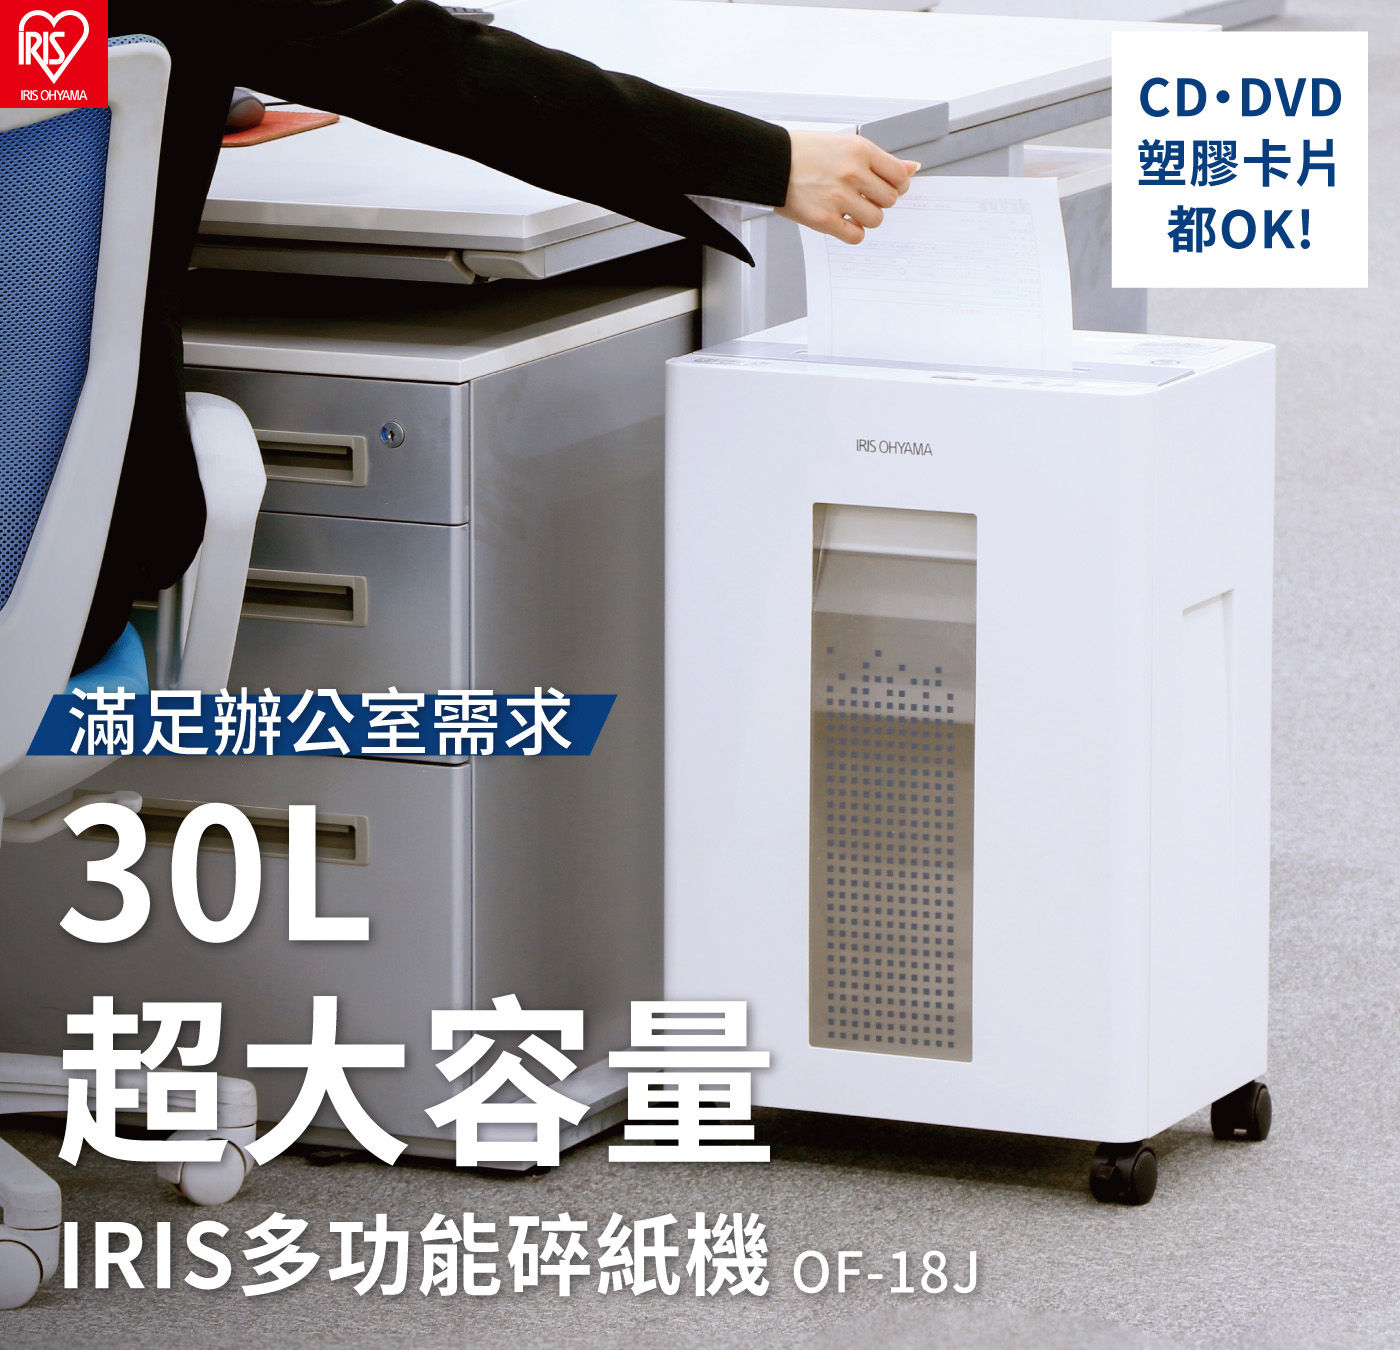 IRIS OHYAMA 30公升事務型碎紙機CD/DVD/塑膠卡片/信用卡都OK滿足辦公室需求大容量